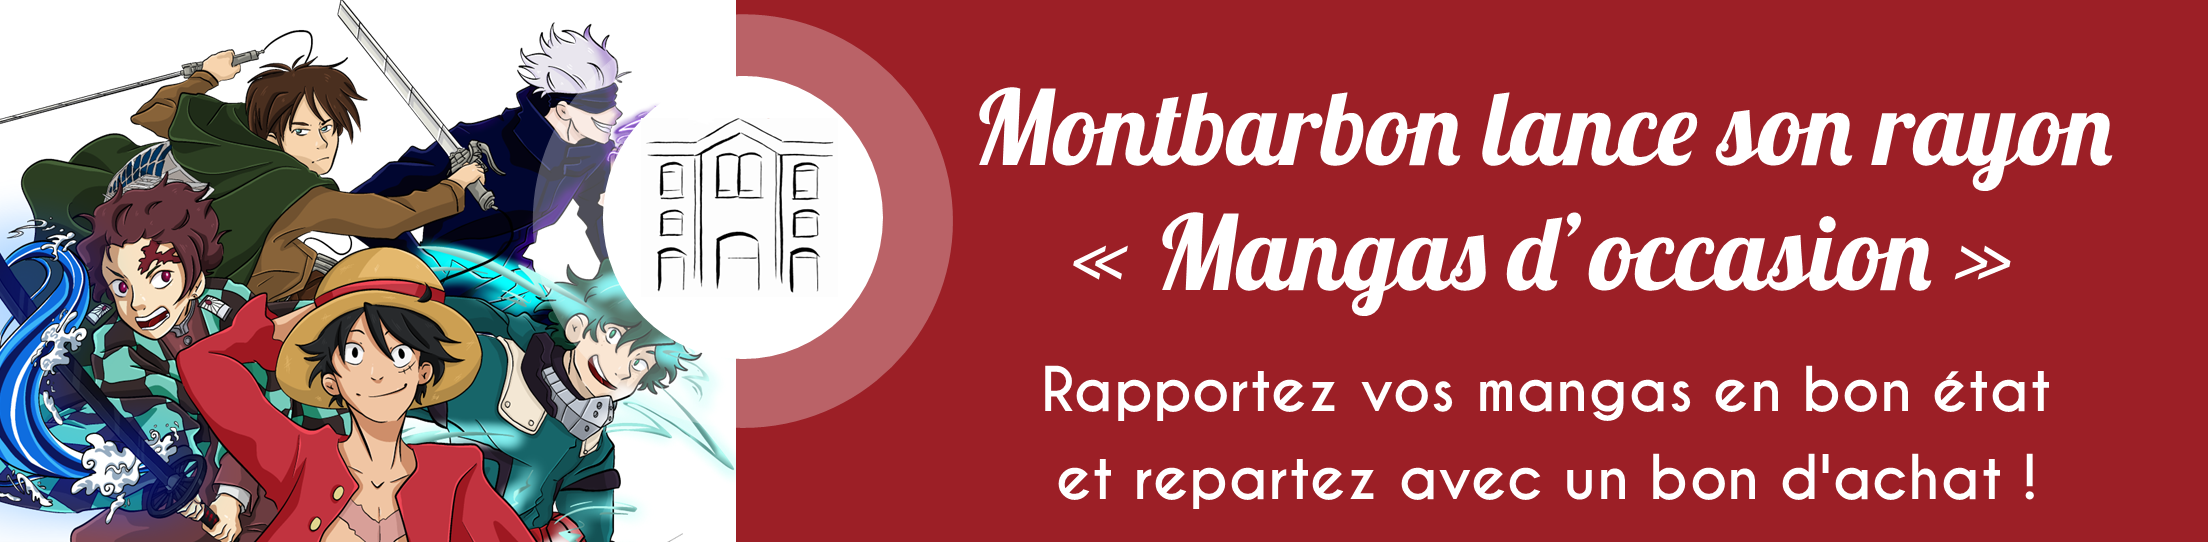 Montbarbon lance son rayon mangas d'occasion - Bourg en Bresse mangas d'occasion